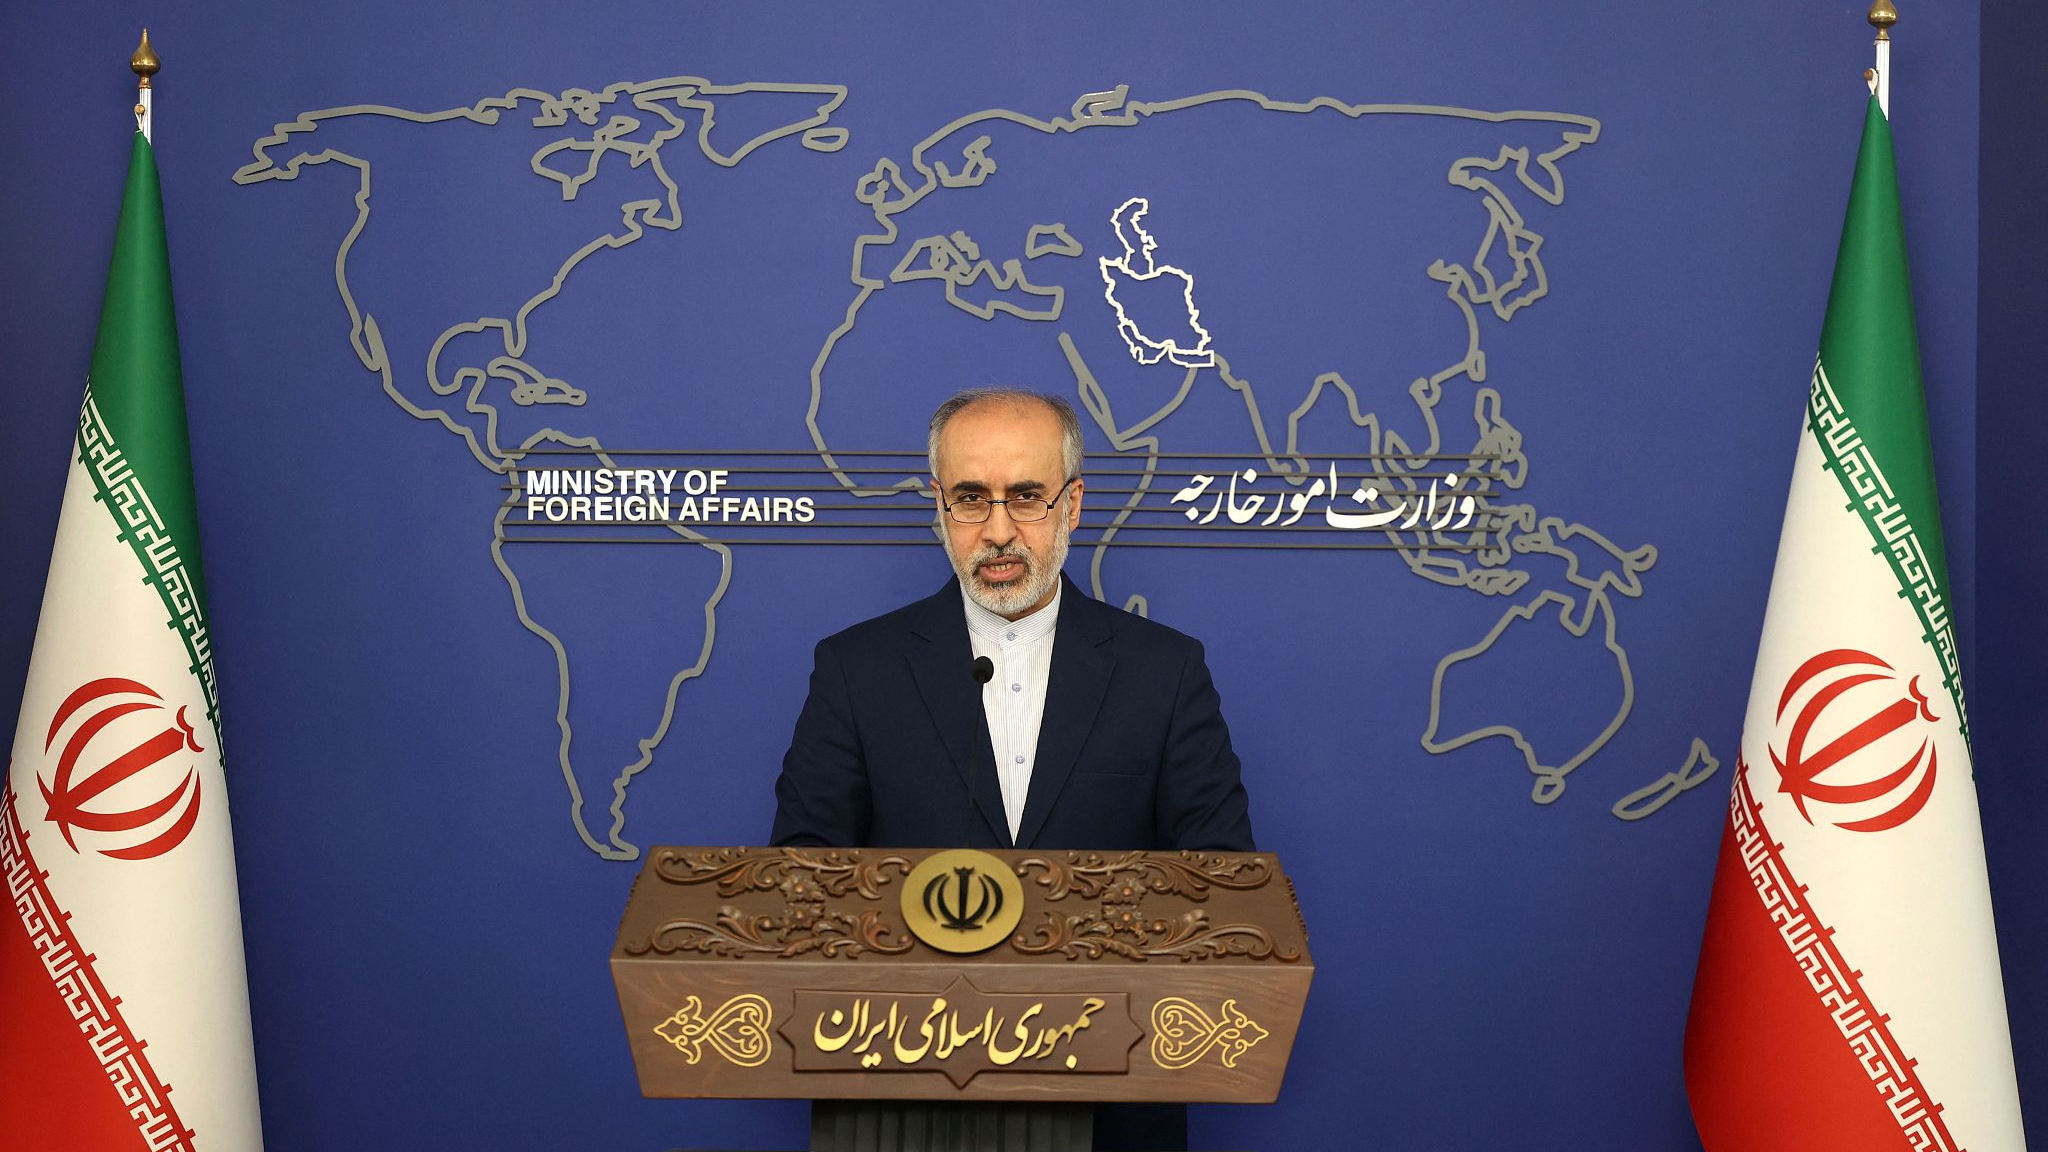 Iran says future of bilateral ties with Saudi Arabia ‘bright, promising’